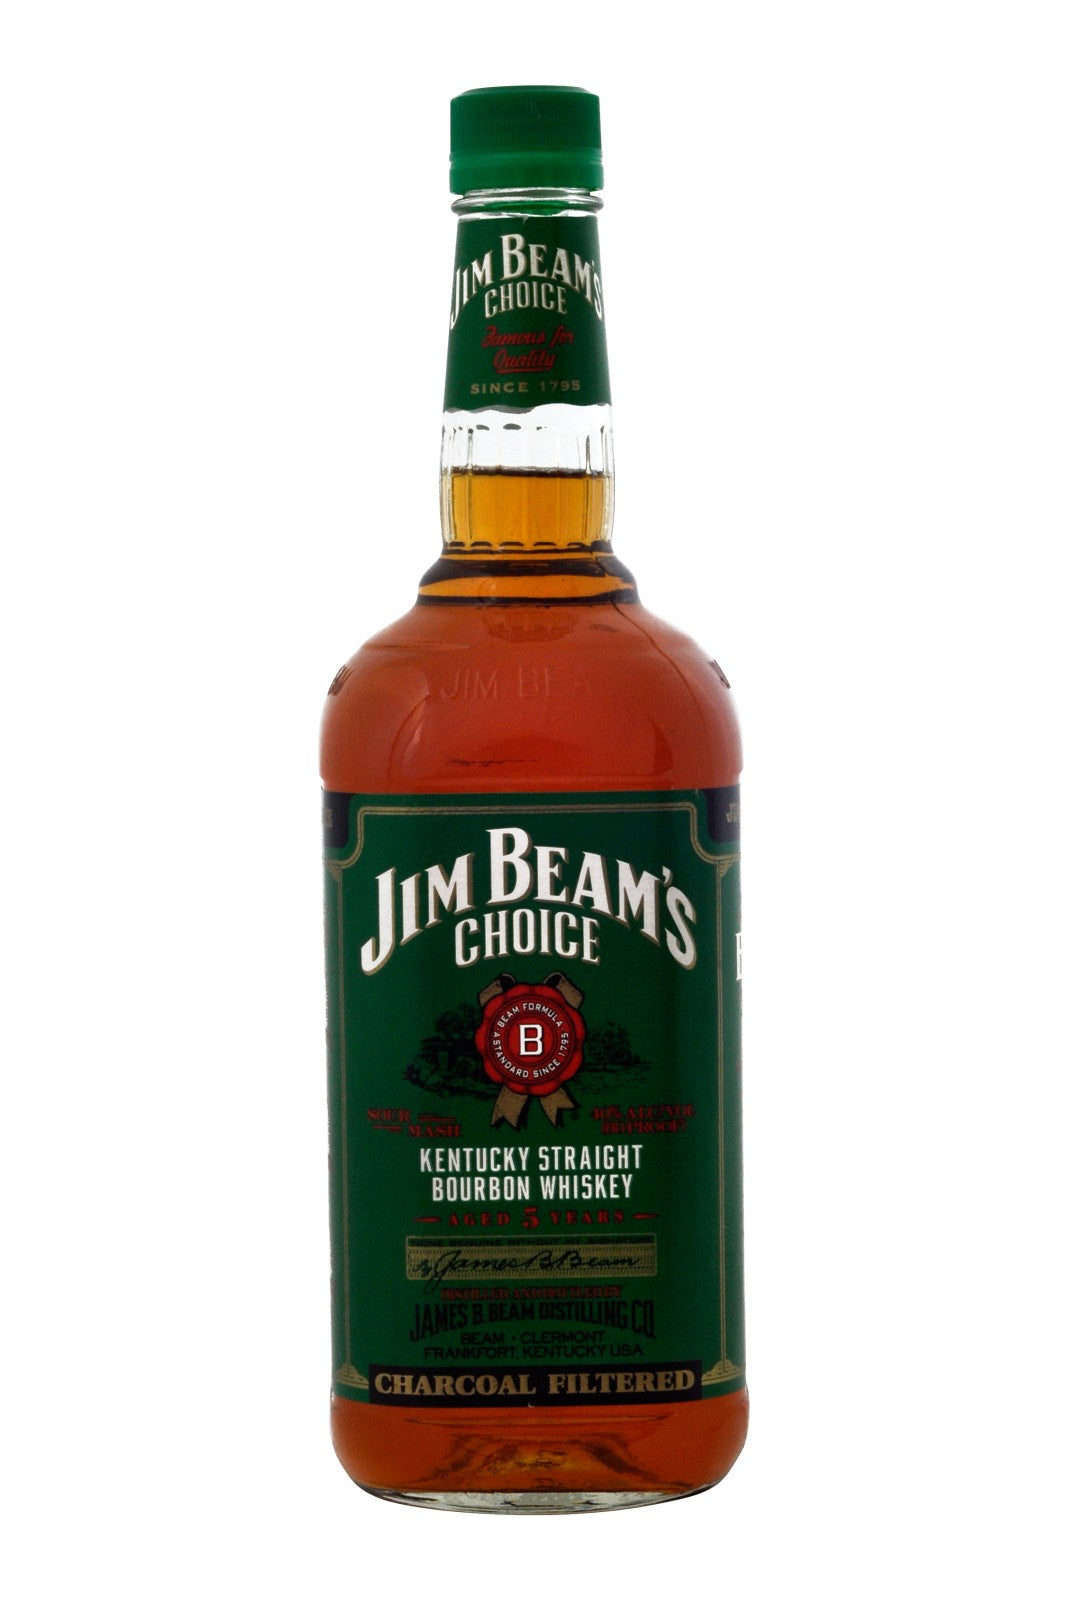 Jim Beam's Choice 5 Year Old